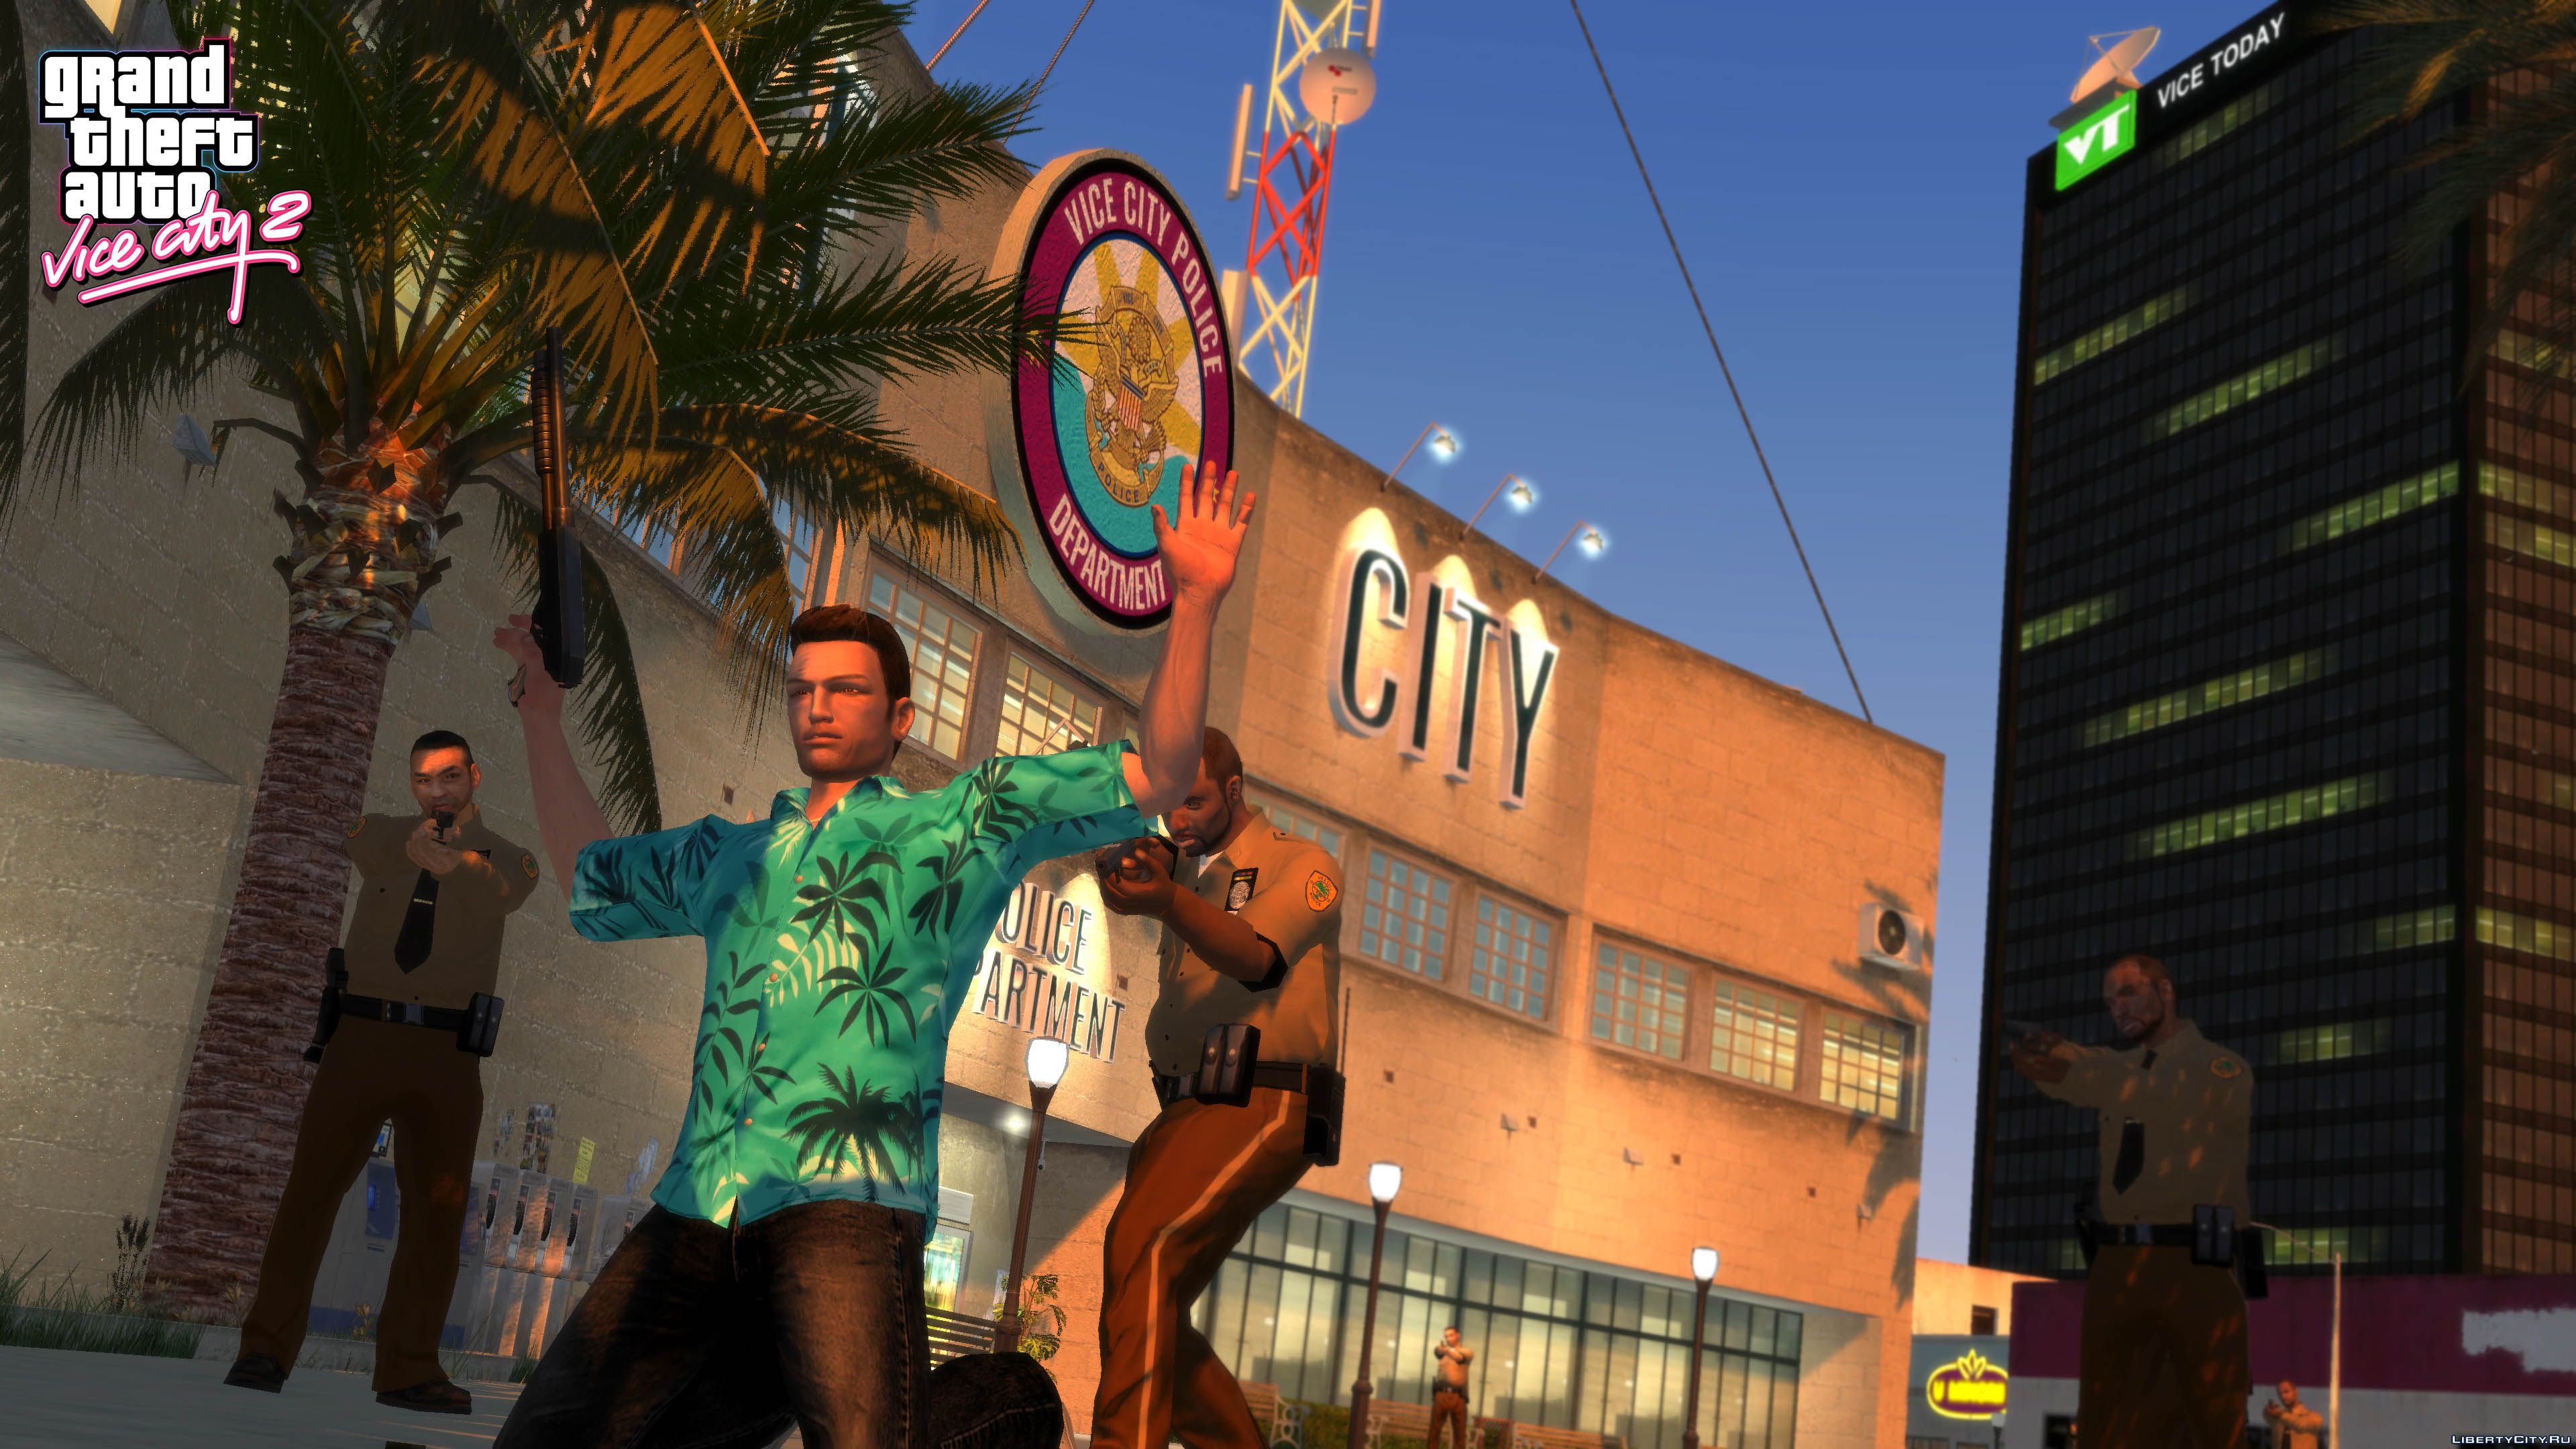 Found an HD mod for GTA Vice City, decided to share screenshots. : r/GTA